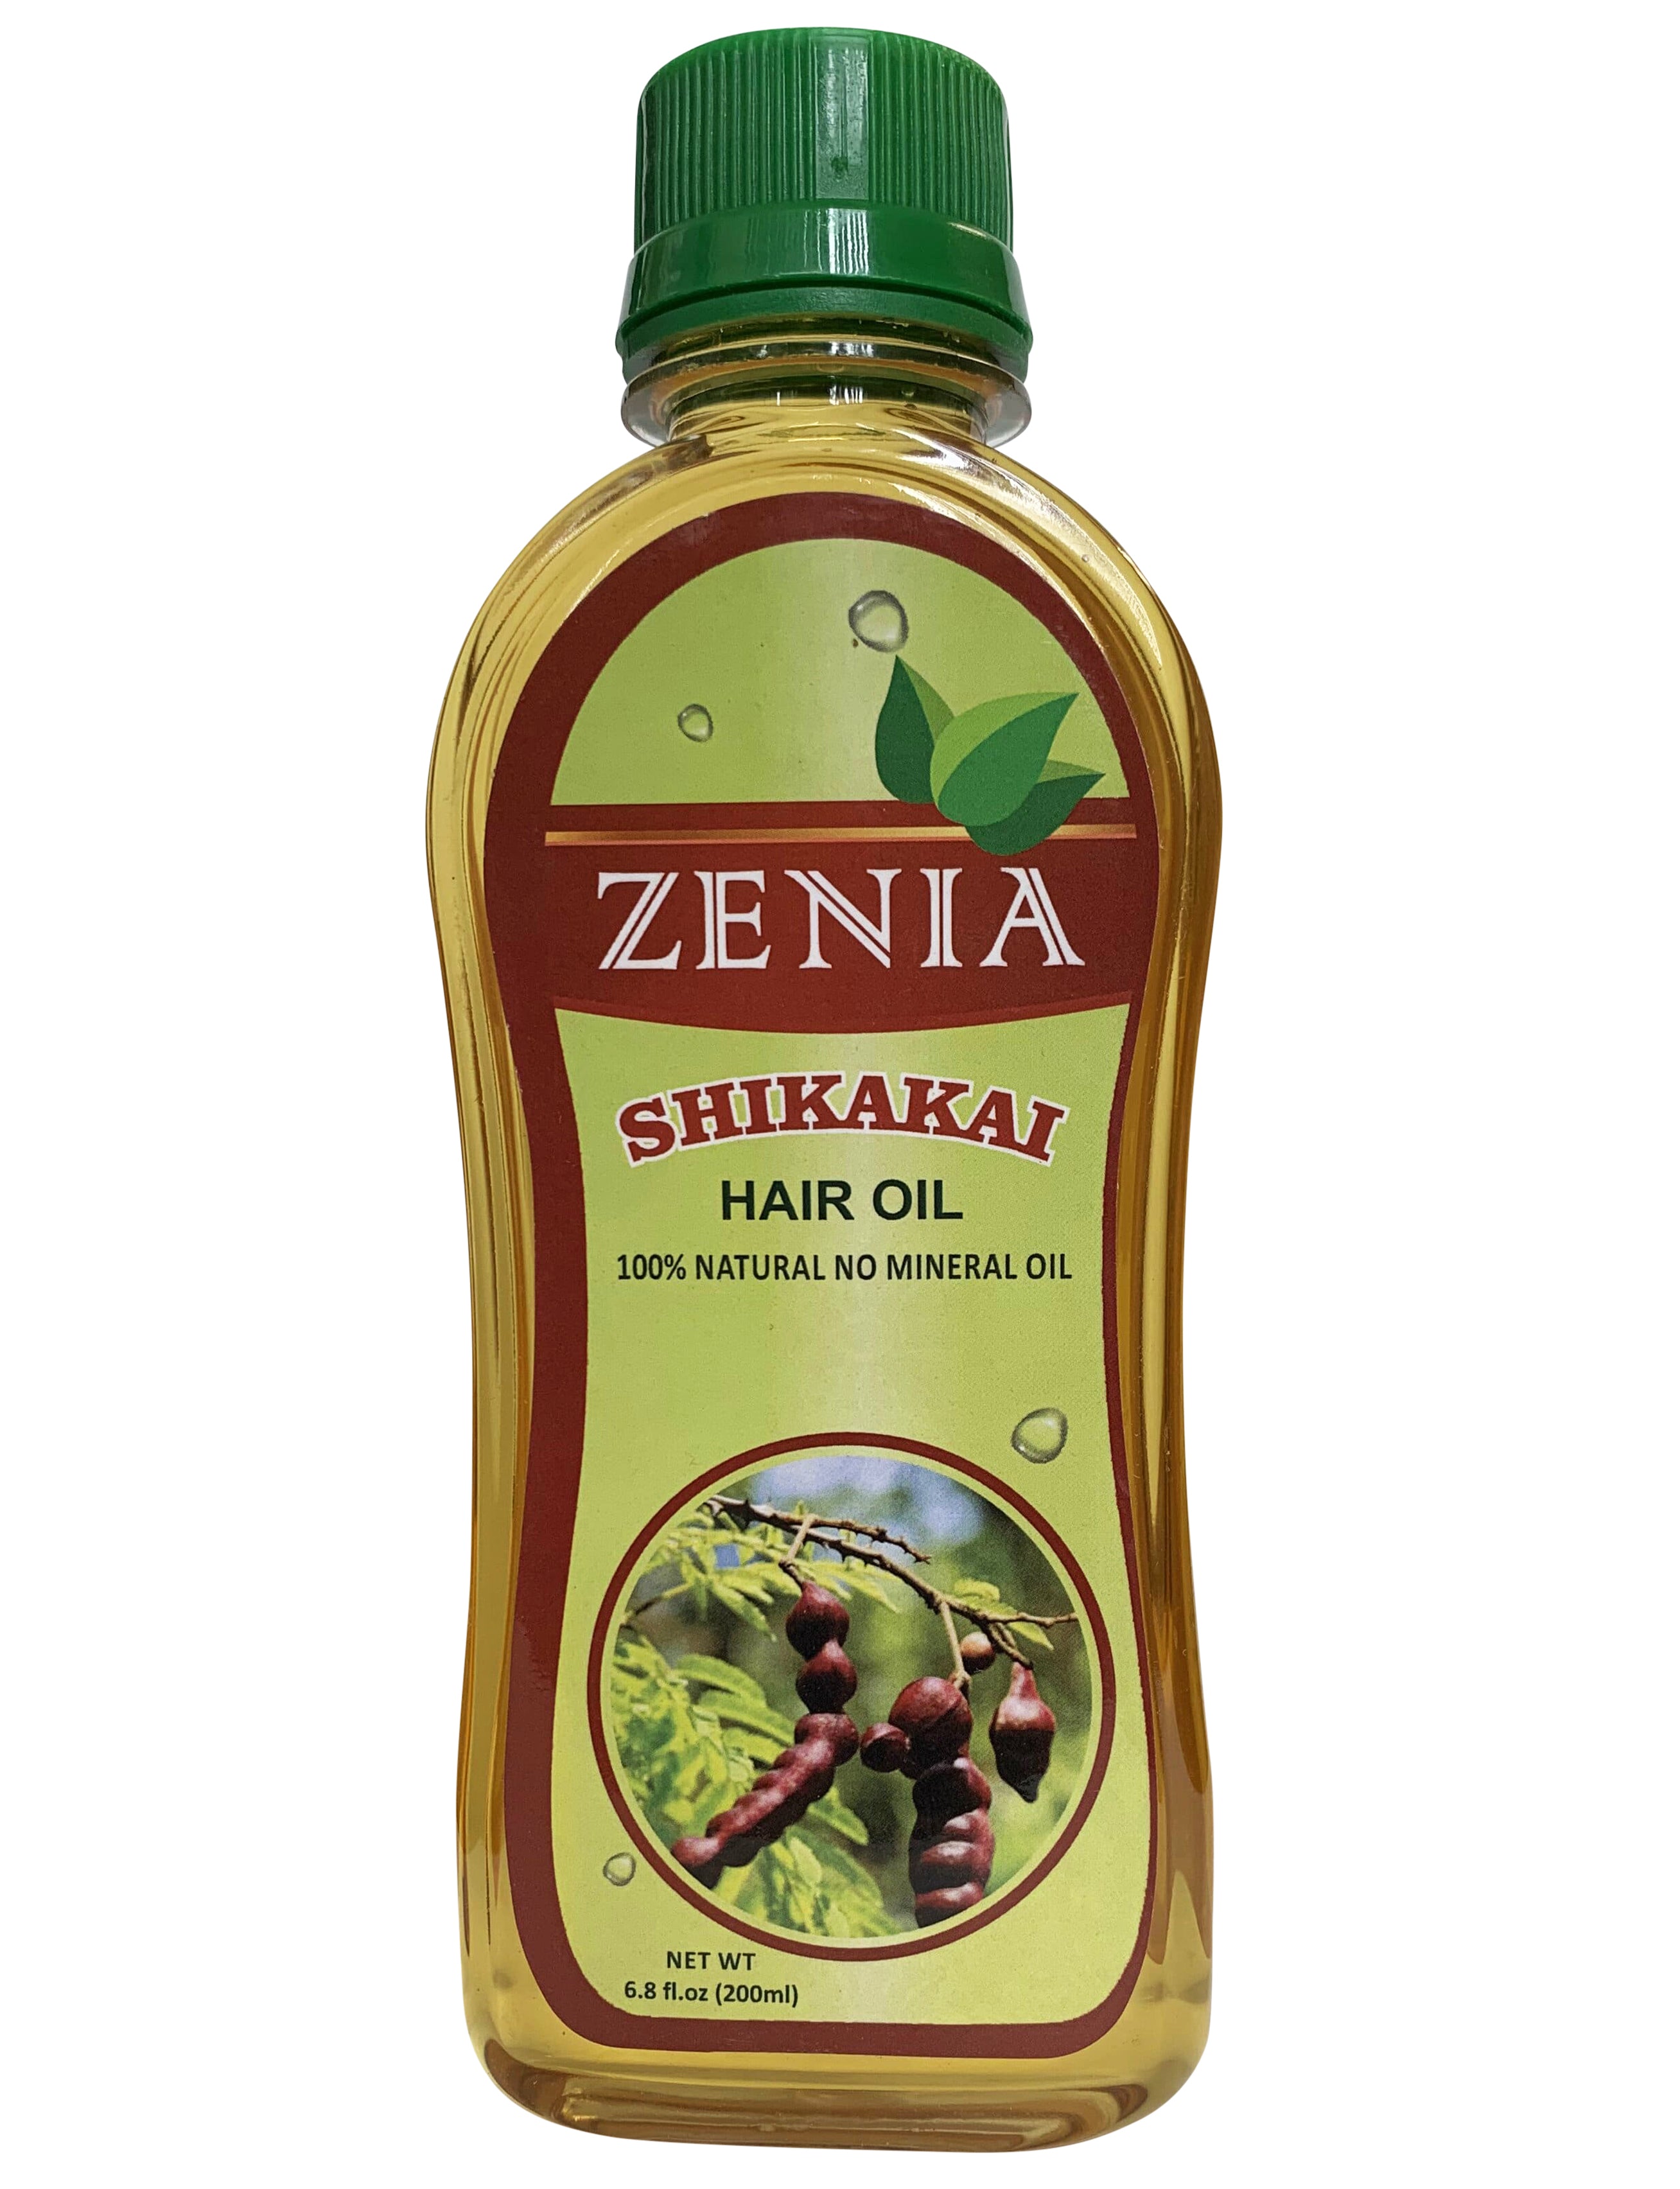 Zenia Shikakai Hair Oil 100% Natural No Mineral Oil 200ml